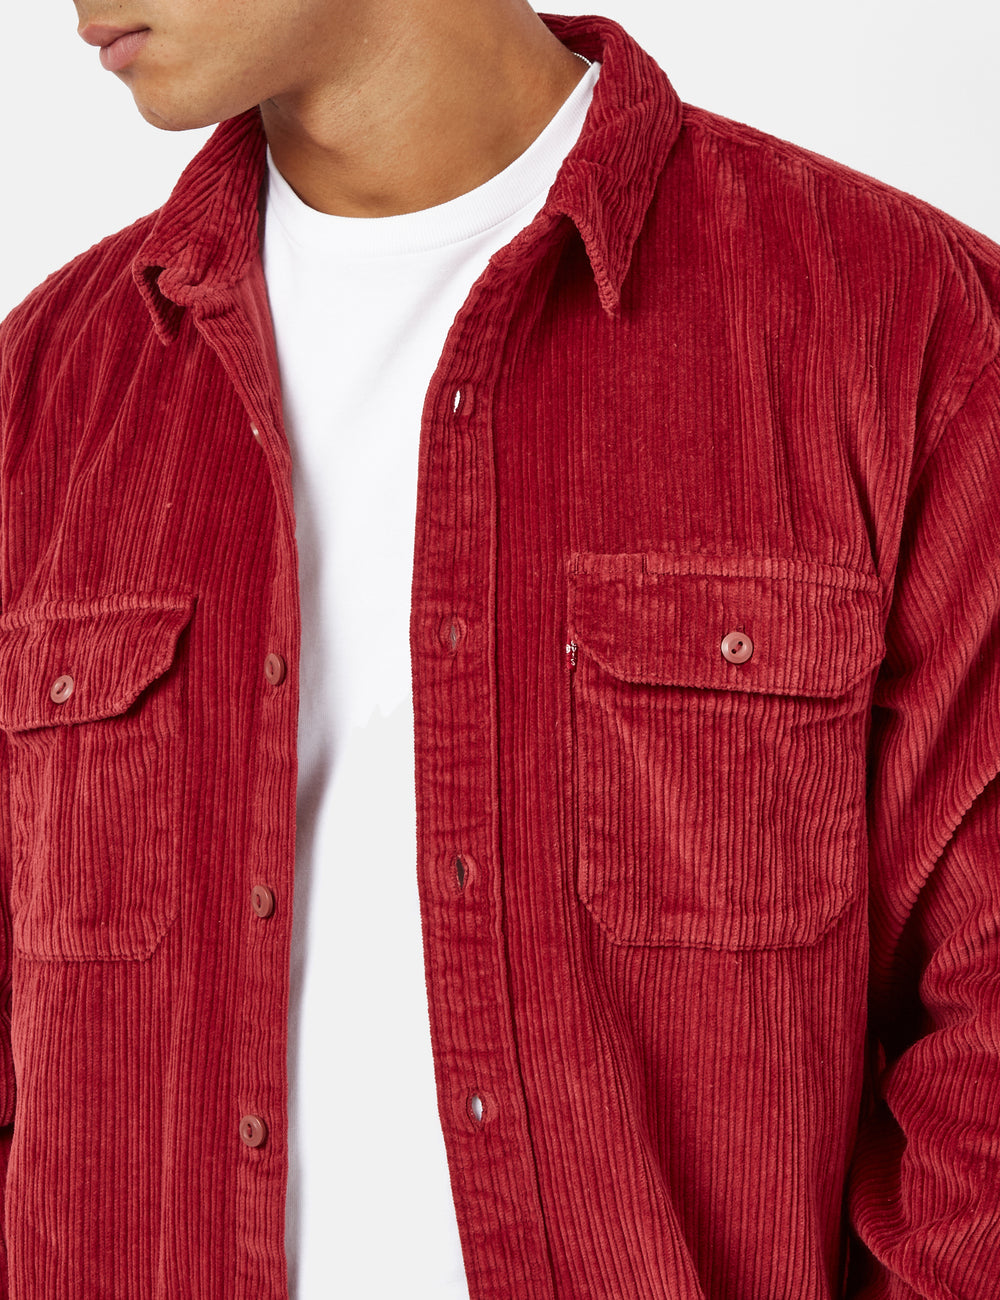 Levis Jackson Worker Shirt (Cord) - Brick Red I Urban Excess. – URBAN EXCESS